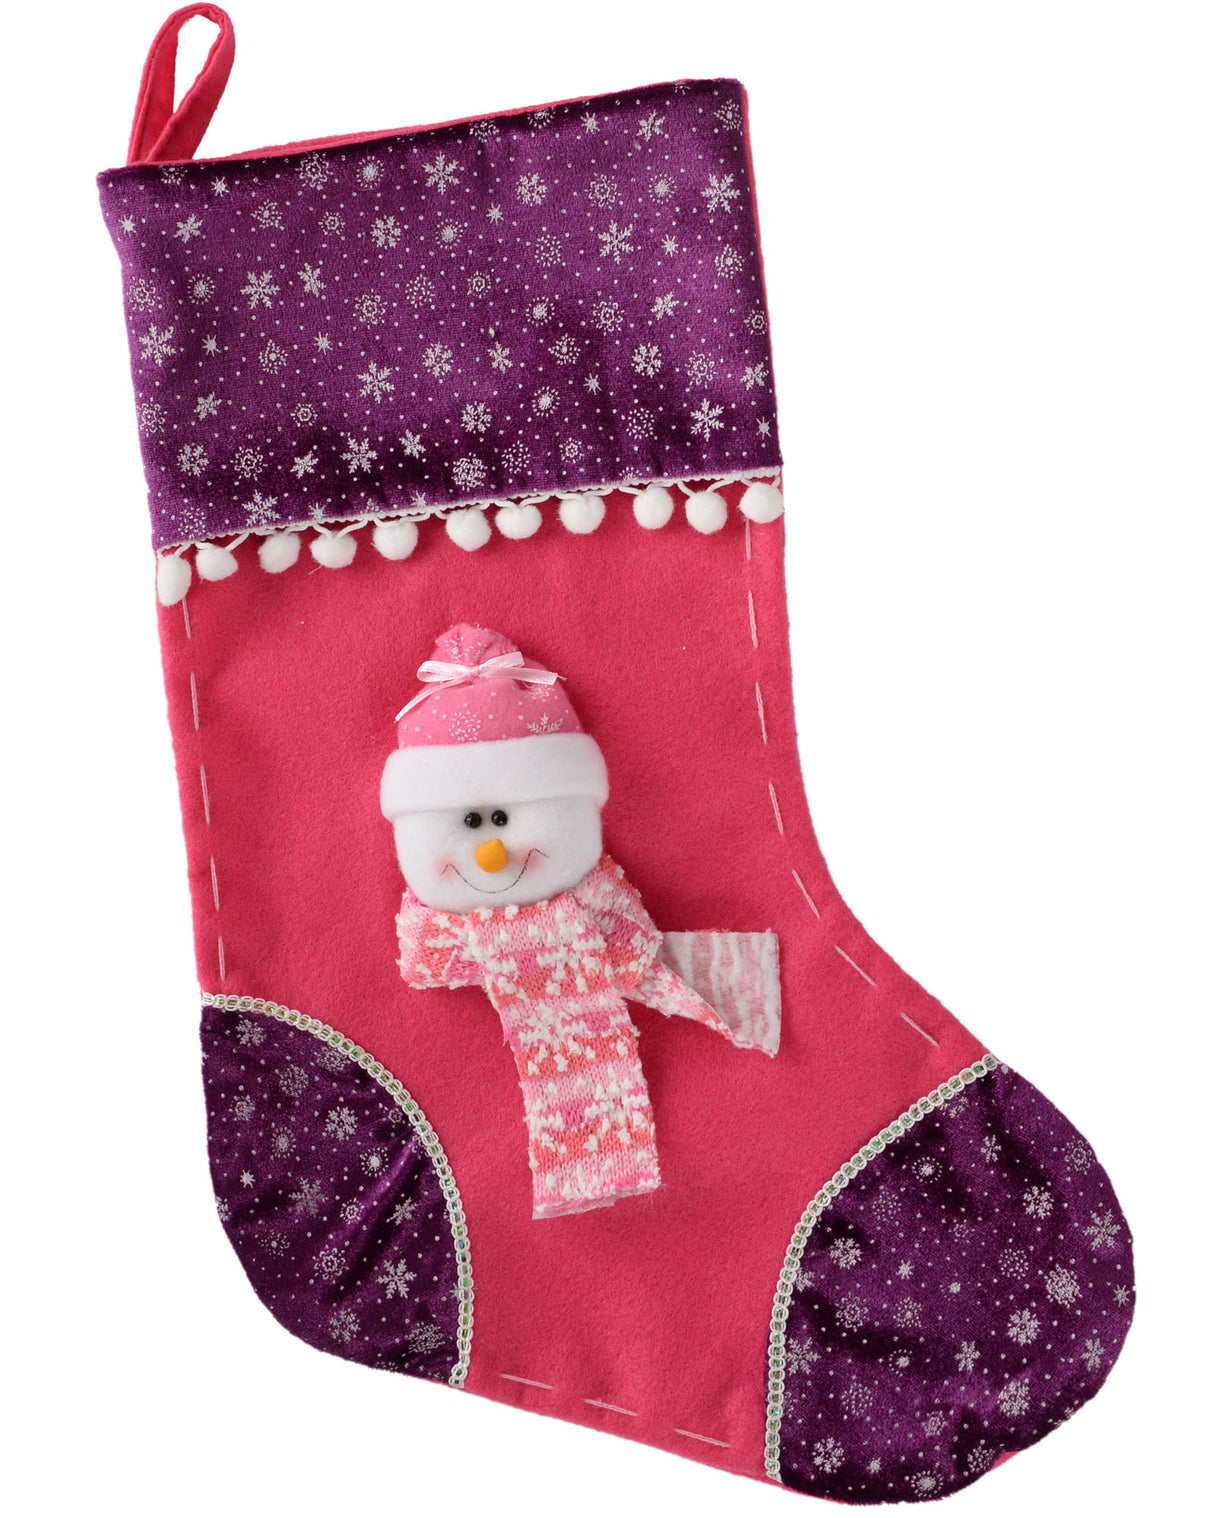 Snowman Stocking, Pink/Purple, 48 cm